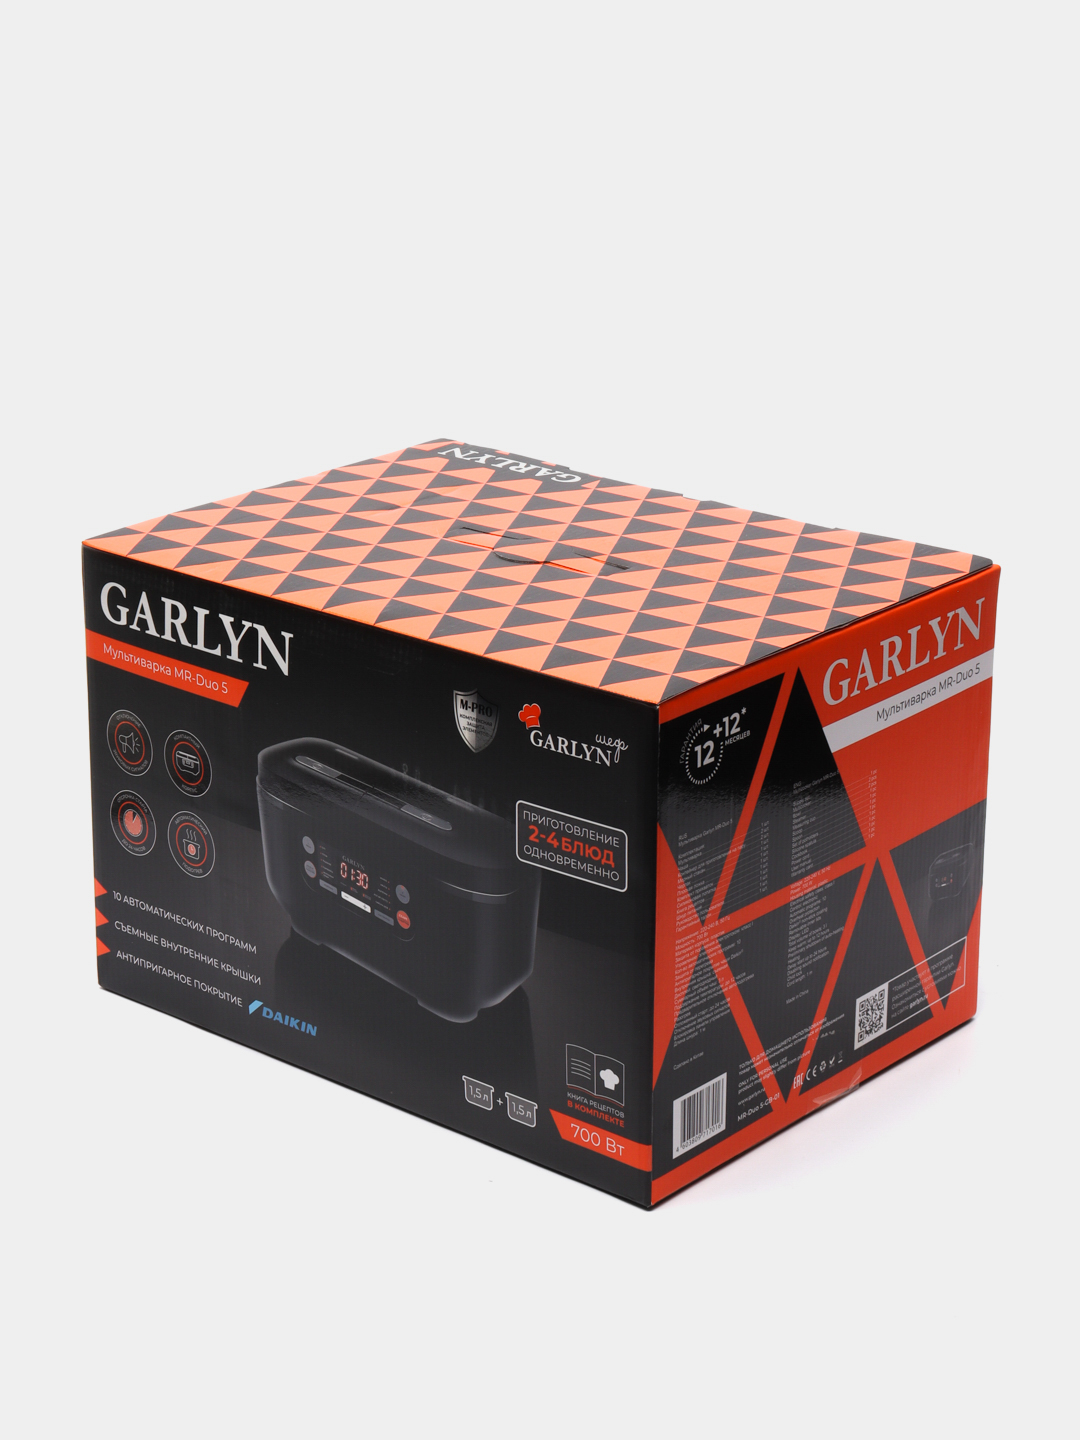 Garlyn mr duo 15. Garlyn Mr-Duo 5. Garlyn Max 5 мультиварка фильтр. Мультиварка Garlyn Mr-Duo 10. Мультиварка Garlyn на 2литра.